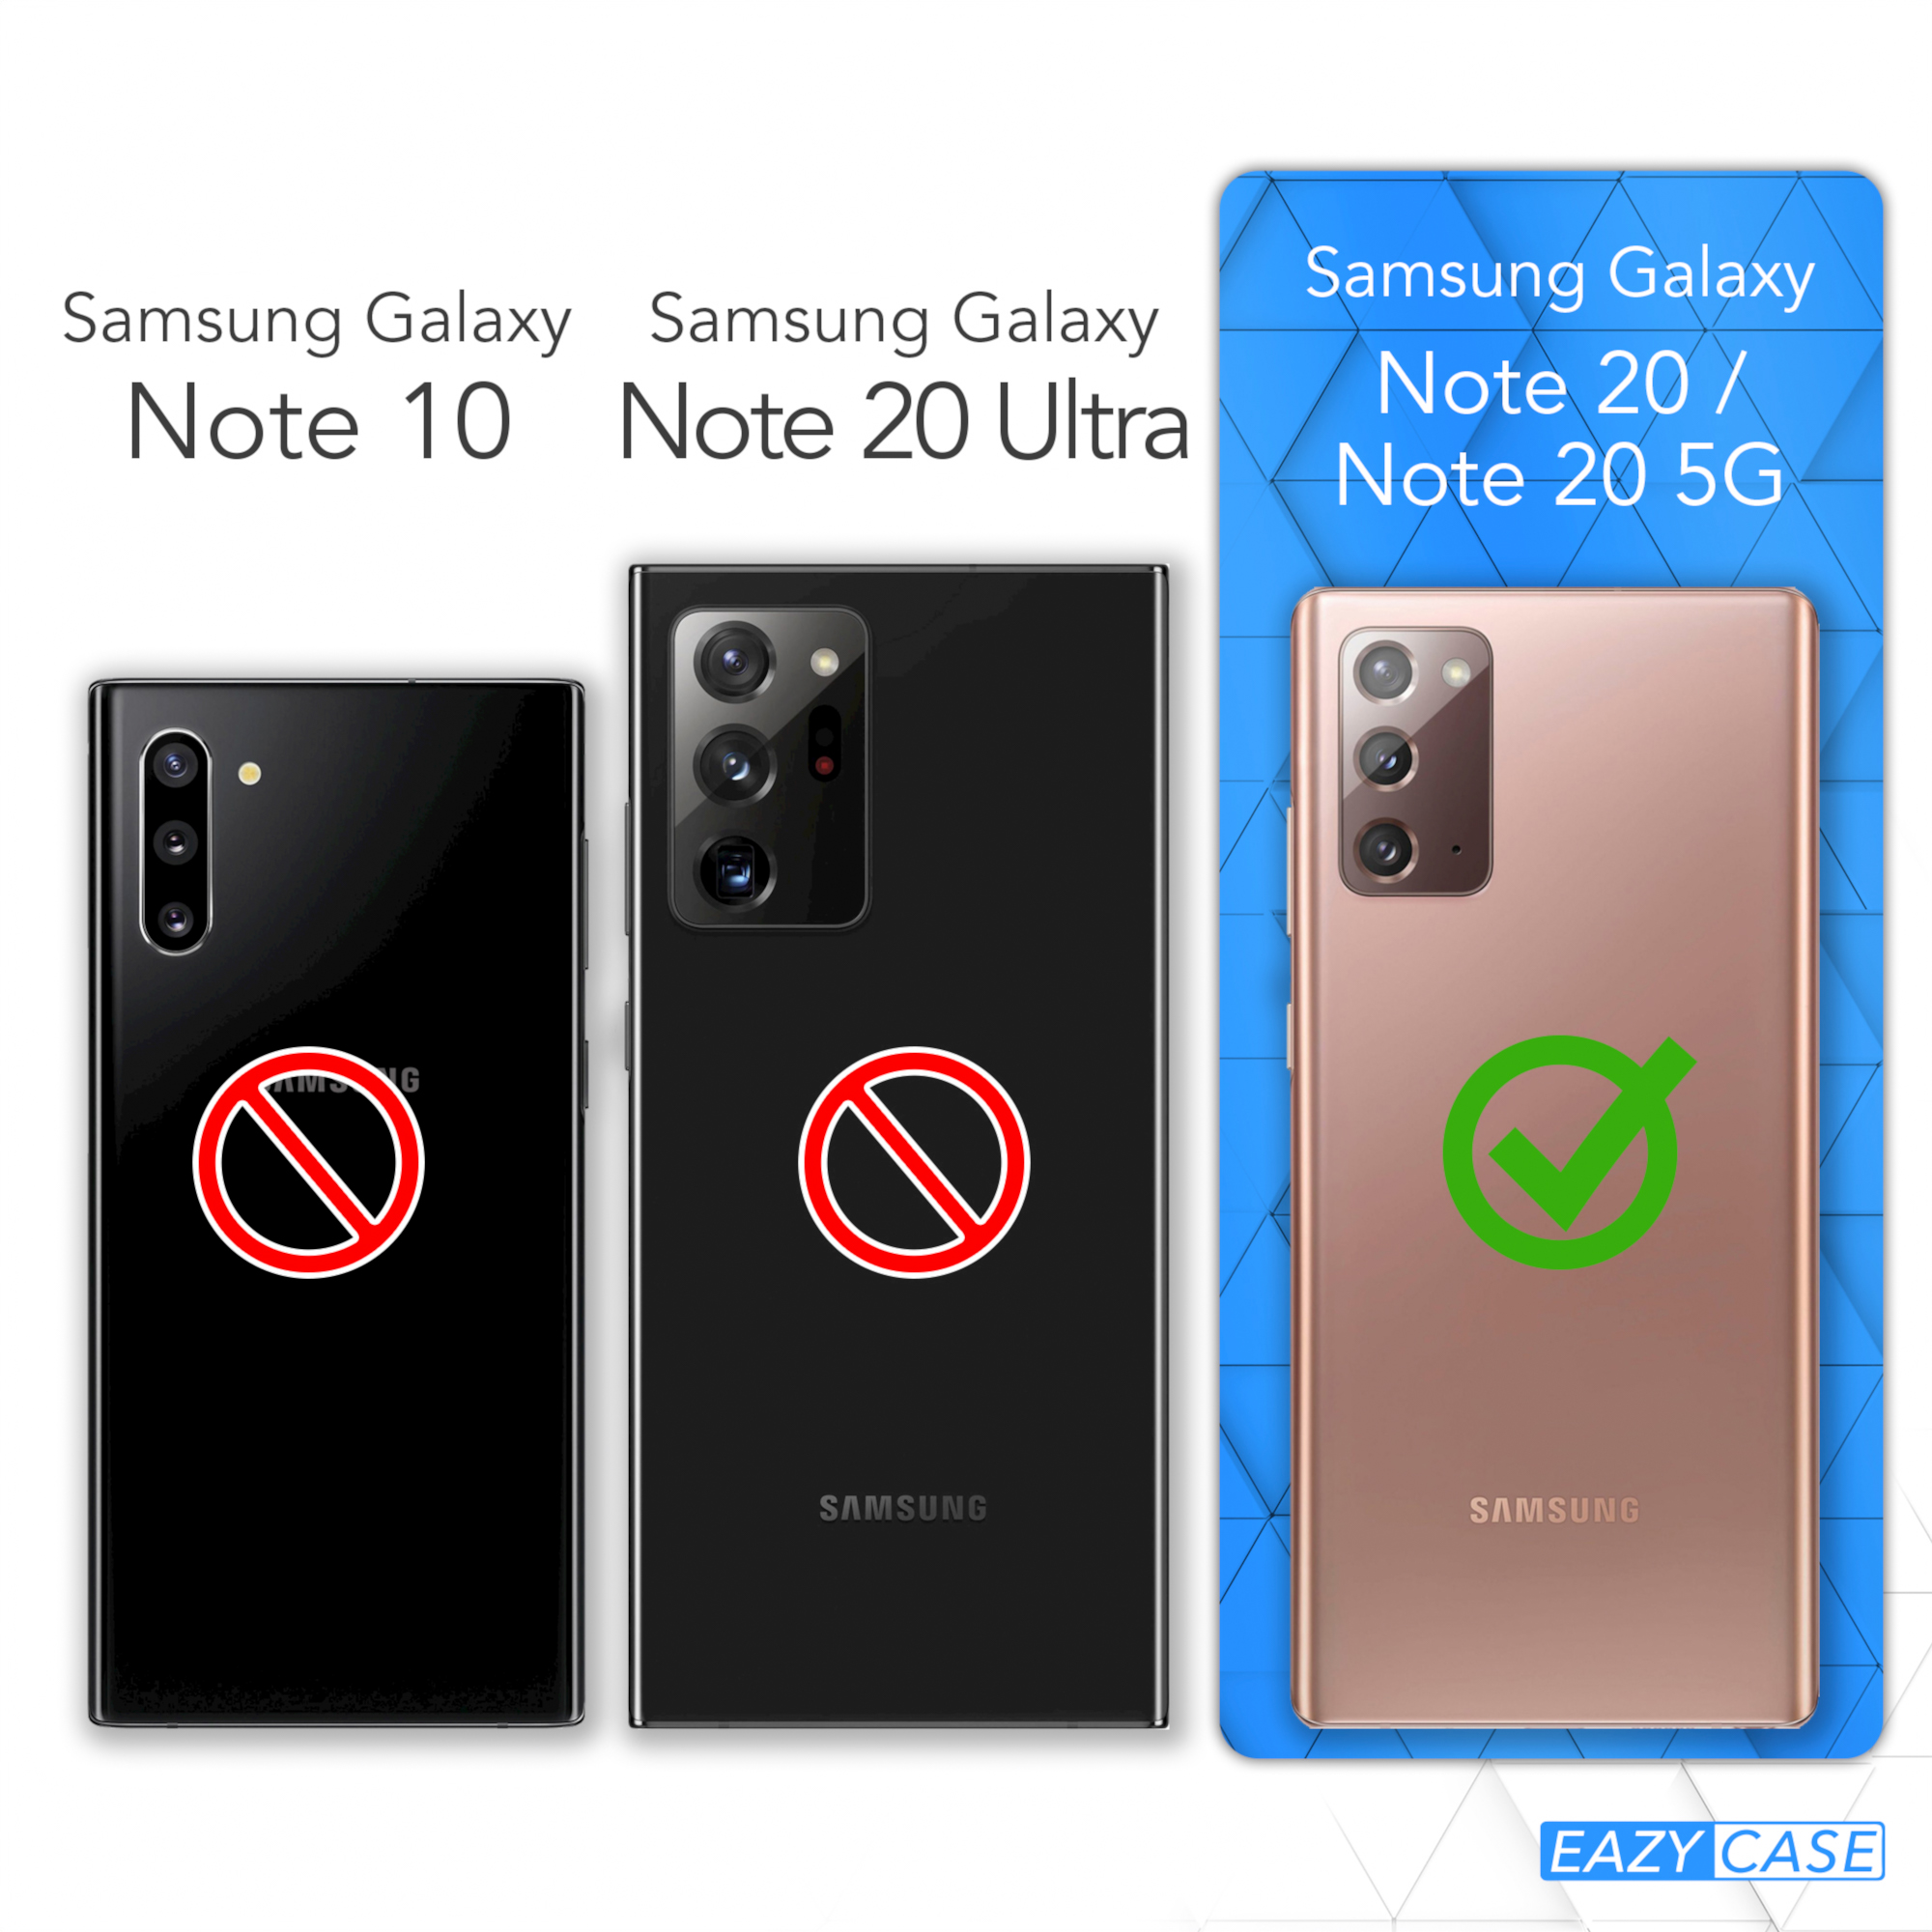 EAZY CASE Note / Clips 5G, Gold 20 Bunt Clear Cover / Umhängetasche, mit Note Galaxy 20 Umhängeband, Samsung